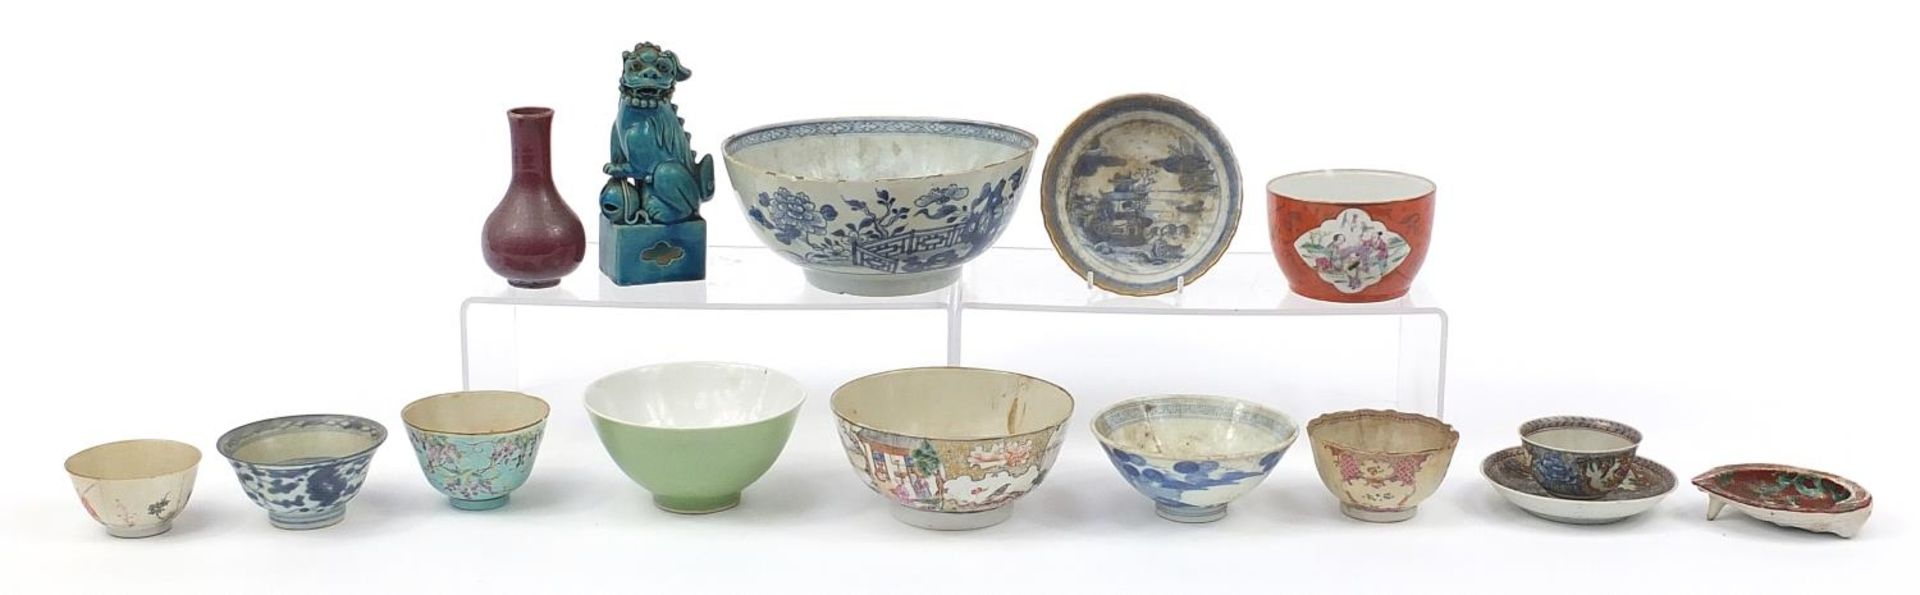 Chinese porcelain including a celadon glazed bowl and sang de boeuf vase, the largest 20.5cm in